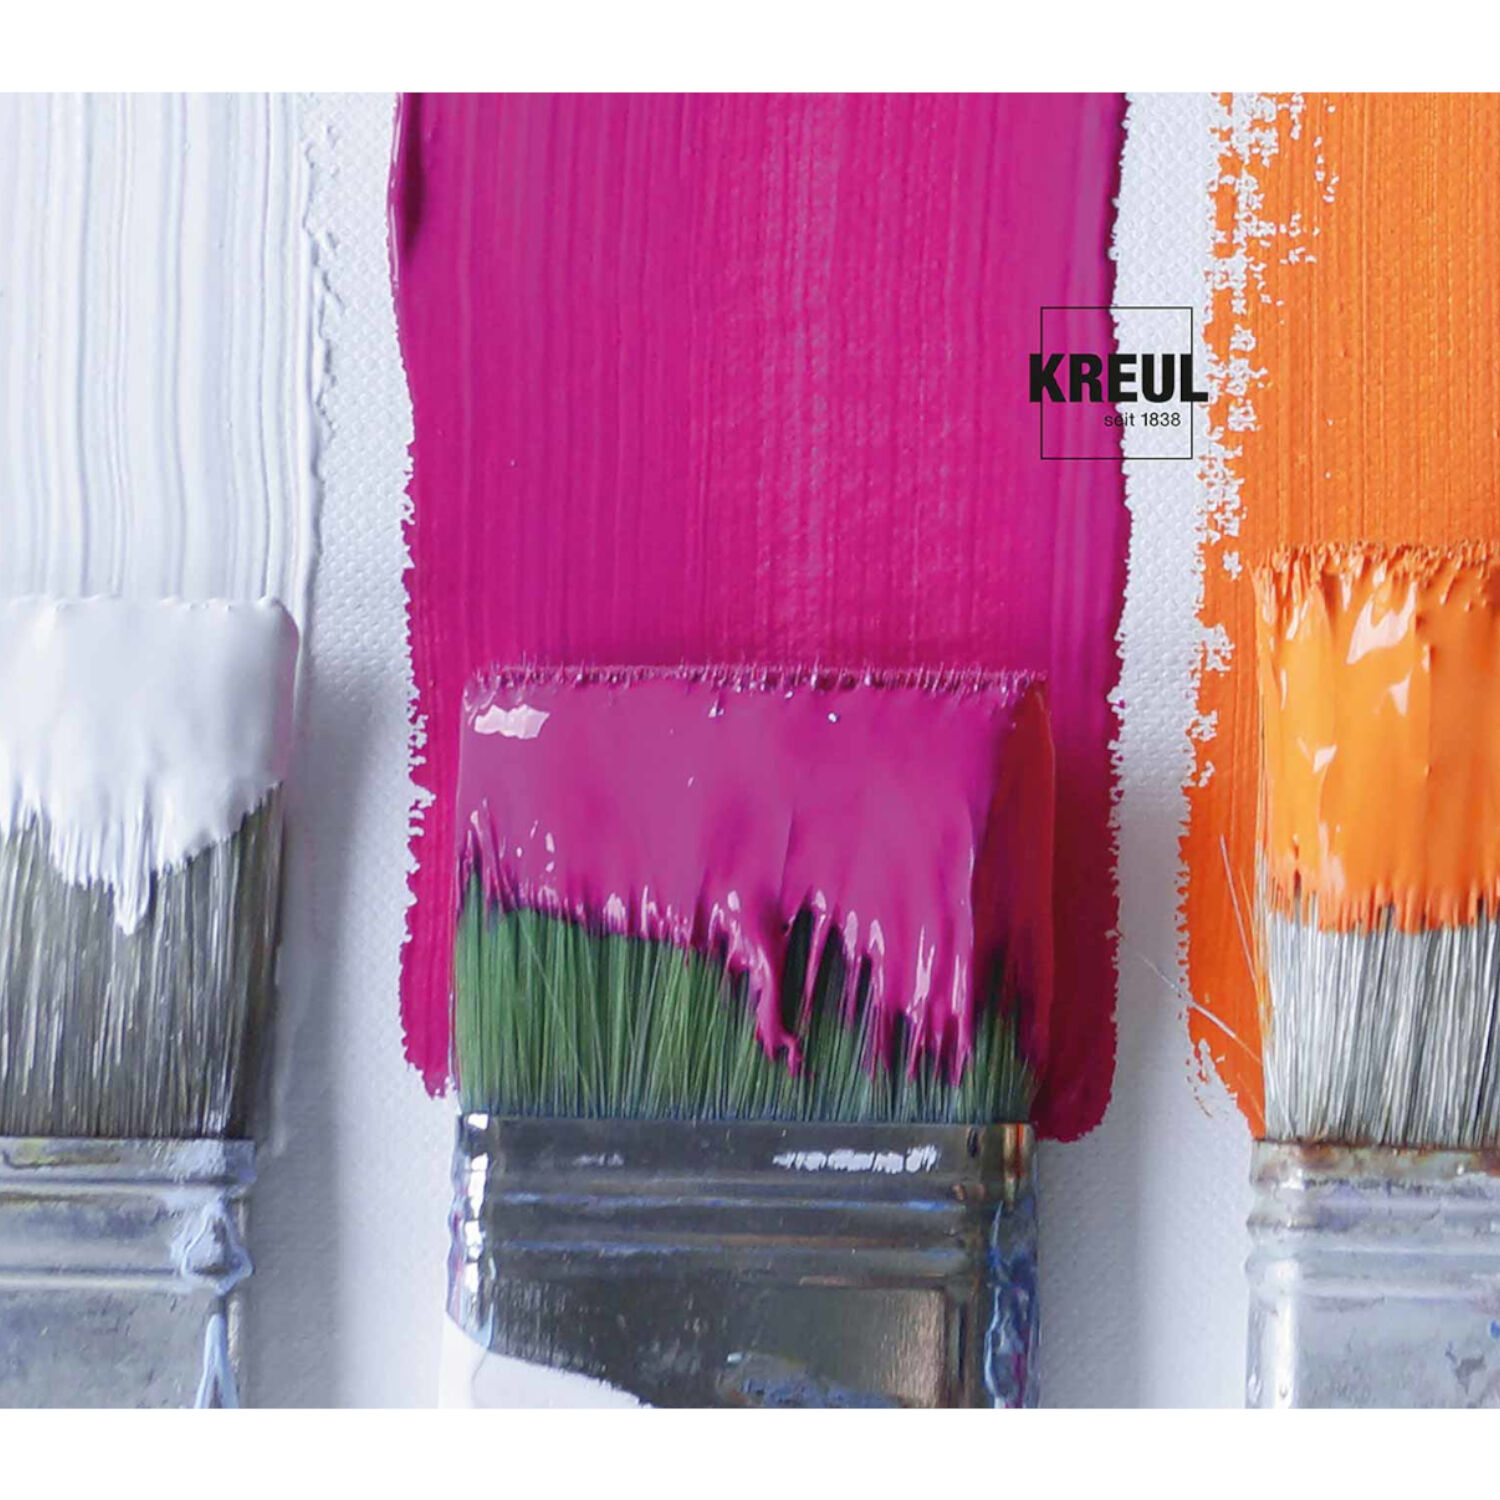 Kreul Solo Goya Acrylic Acrylfarbe, 100 ml, Lichtgrn Bild 3